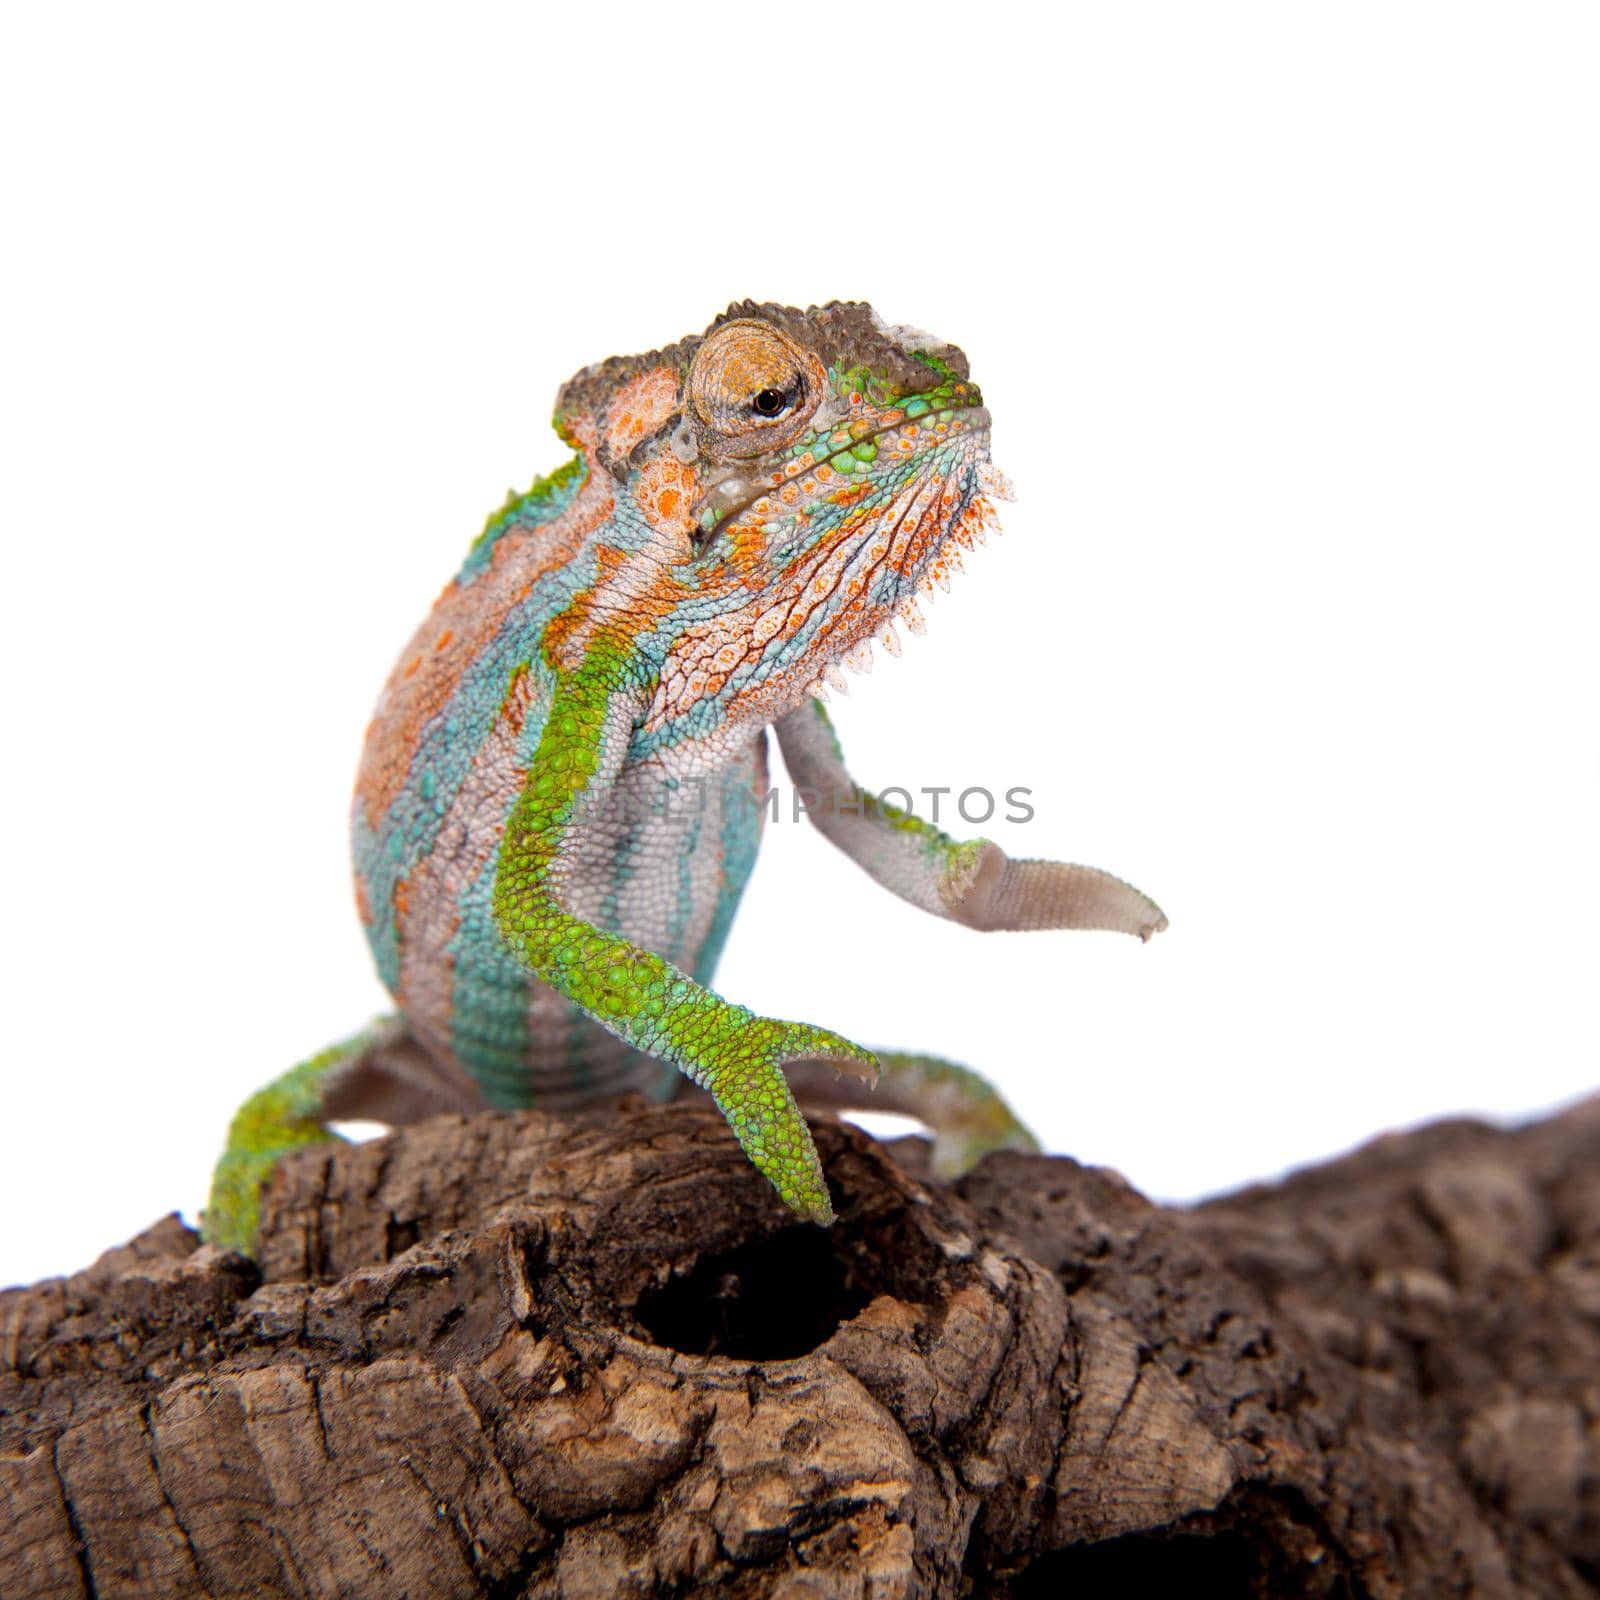 The Cape dwarf chameleon, Bradypodion pumilum, on white by RosaJay